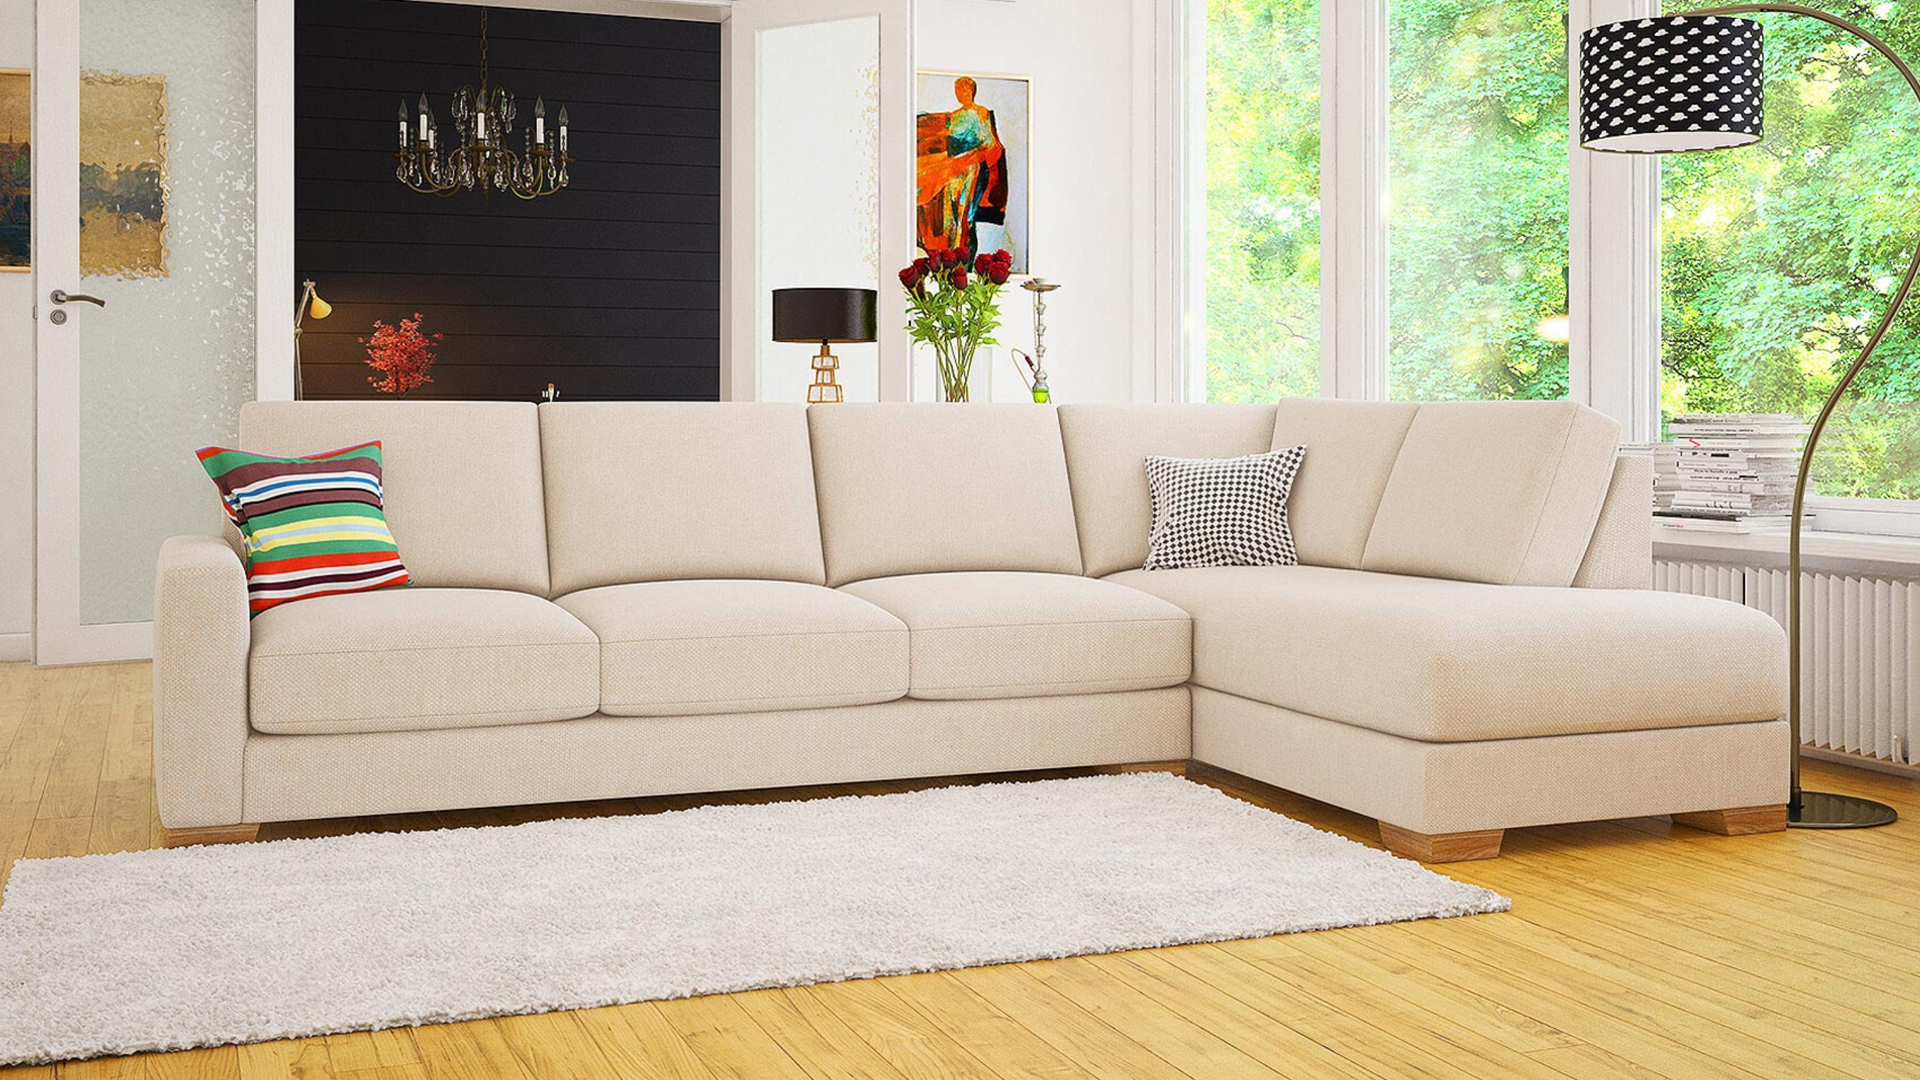 DreamSofa Sectional Sofa Buying Guide